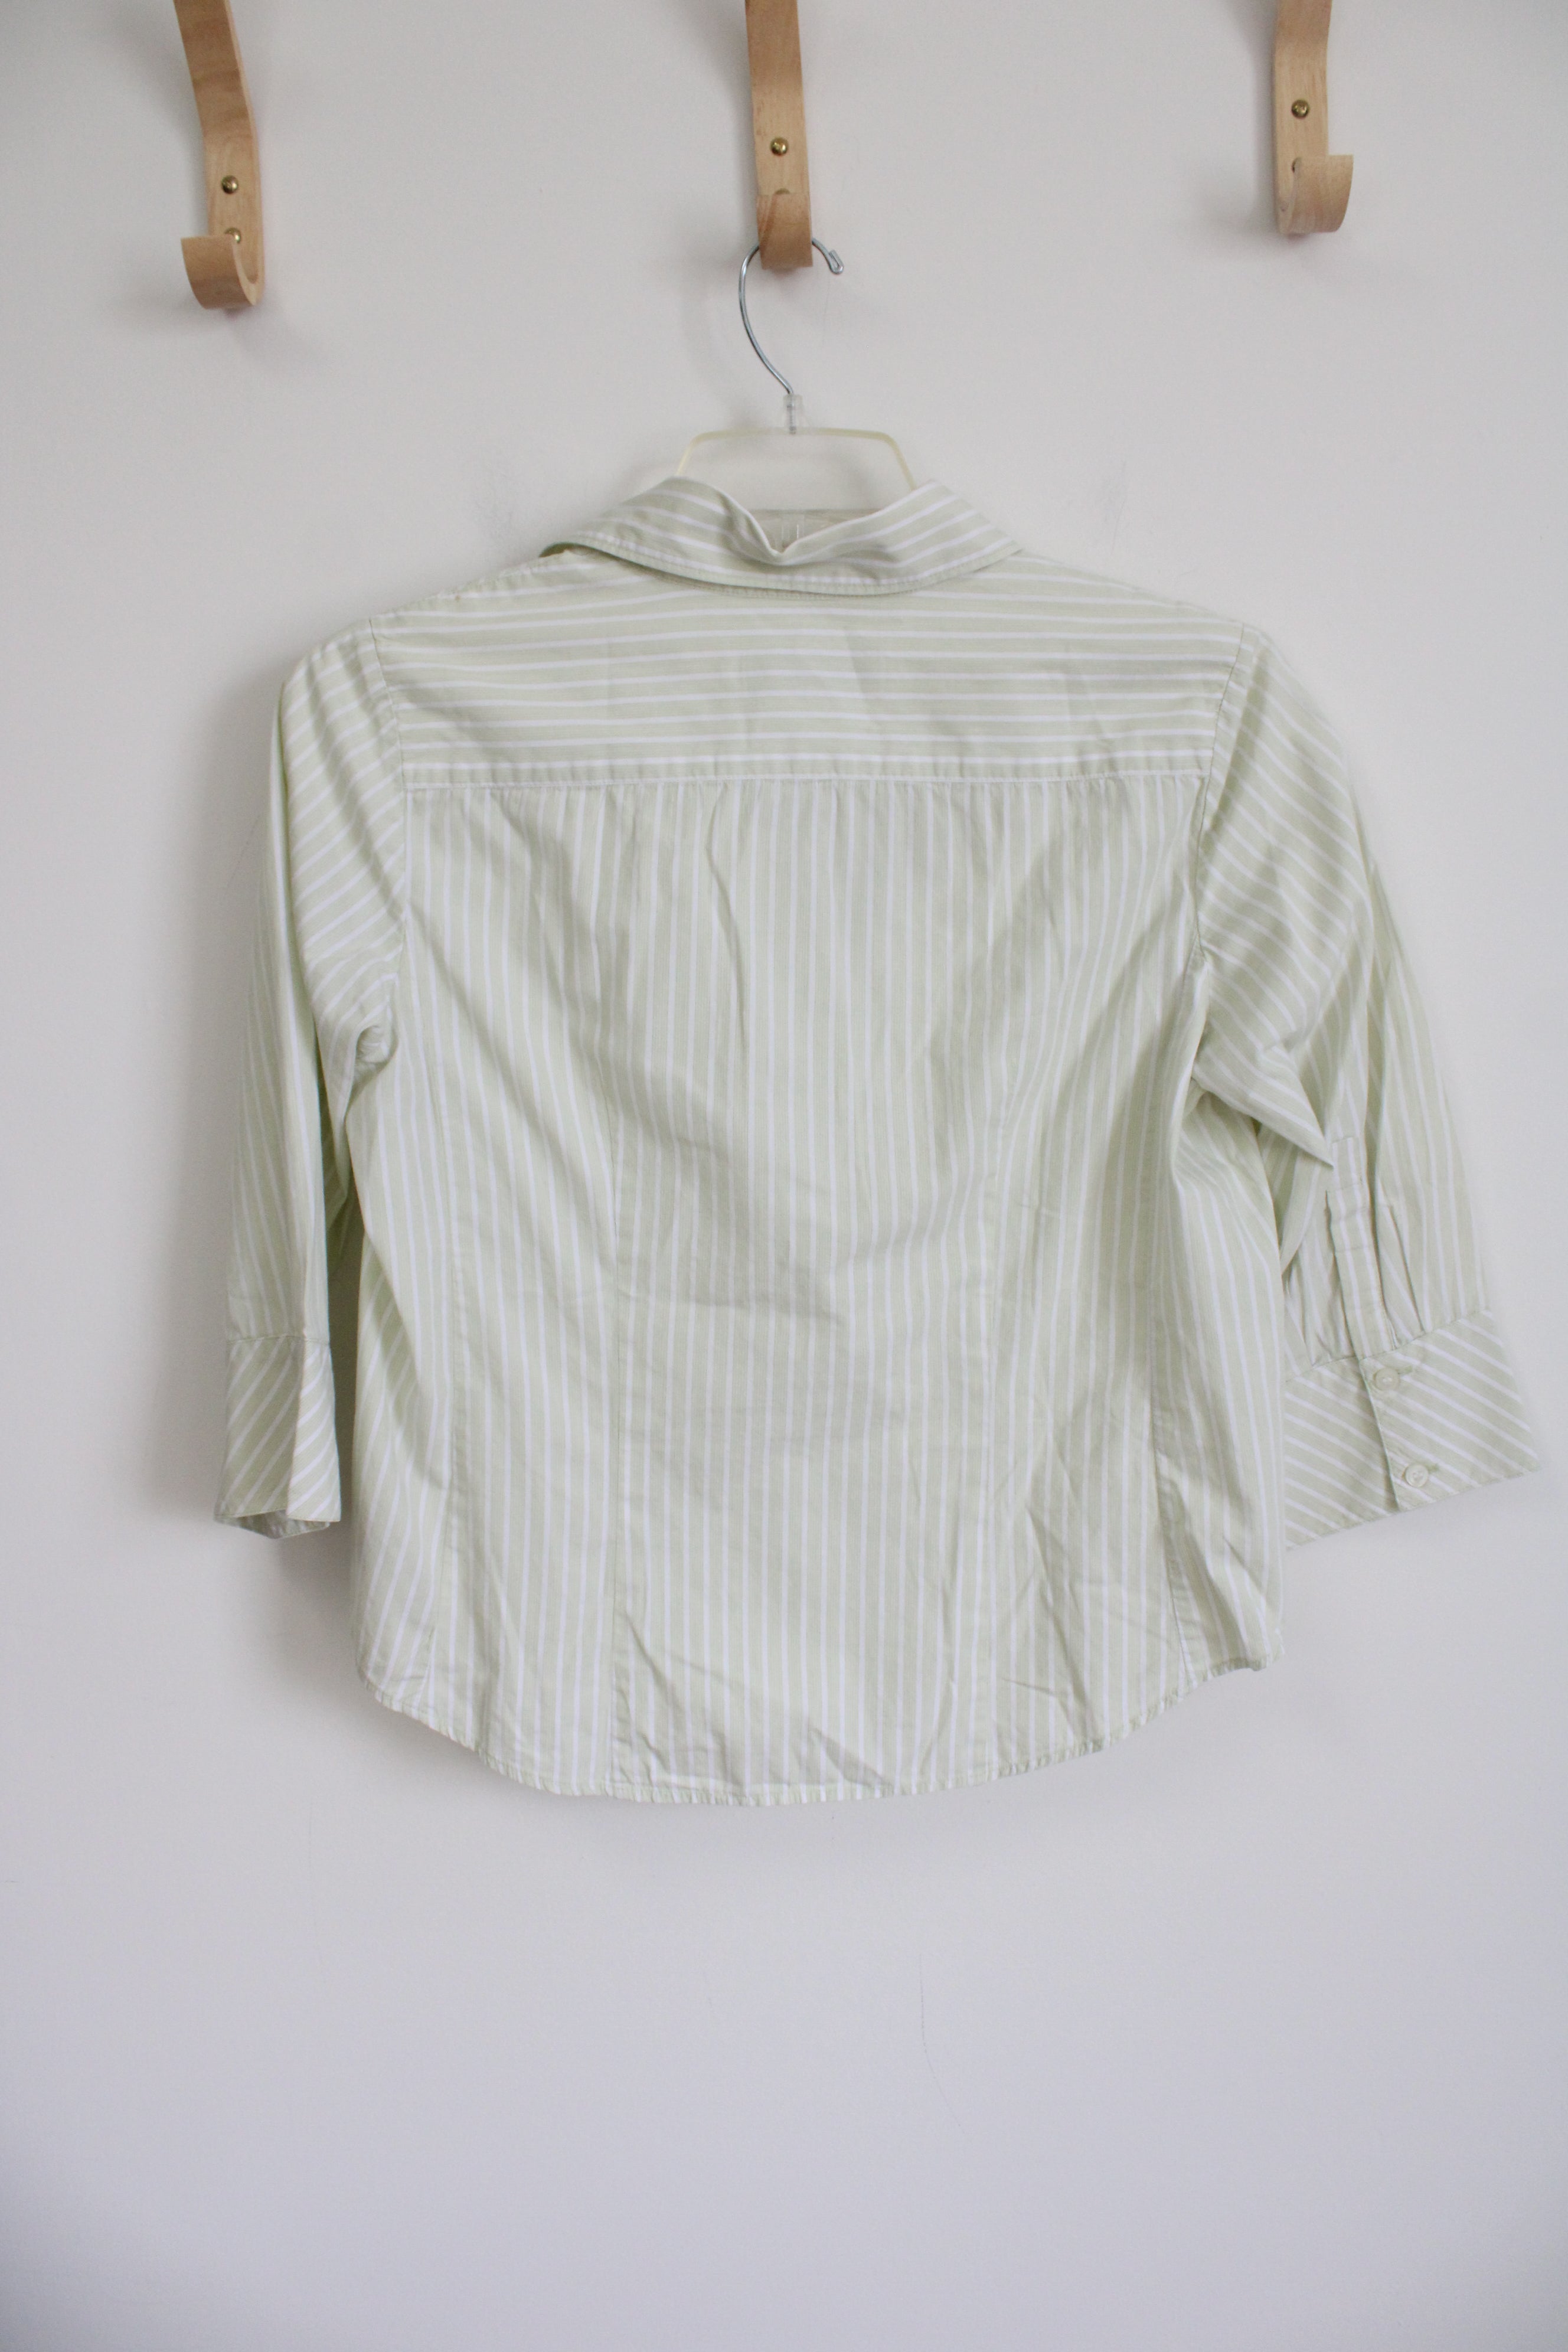 First Issue Liz Claiborne Light Green White Striped Button Down Shirt | L Petite